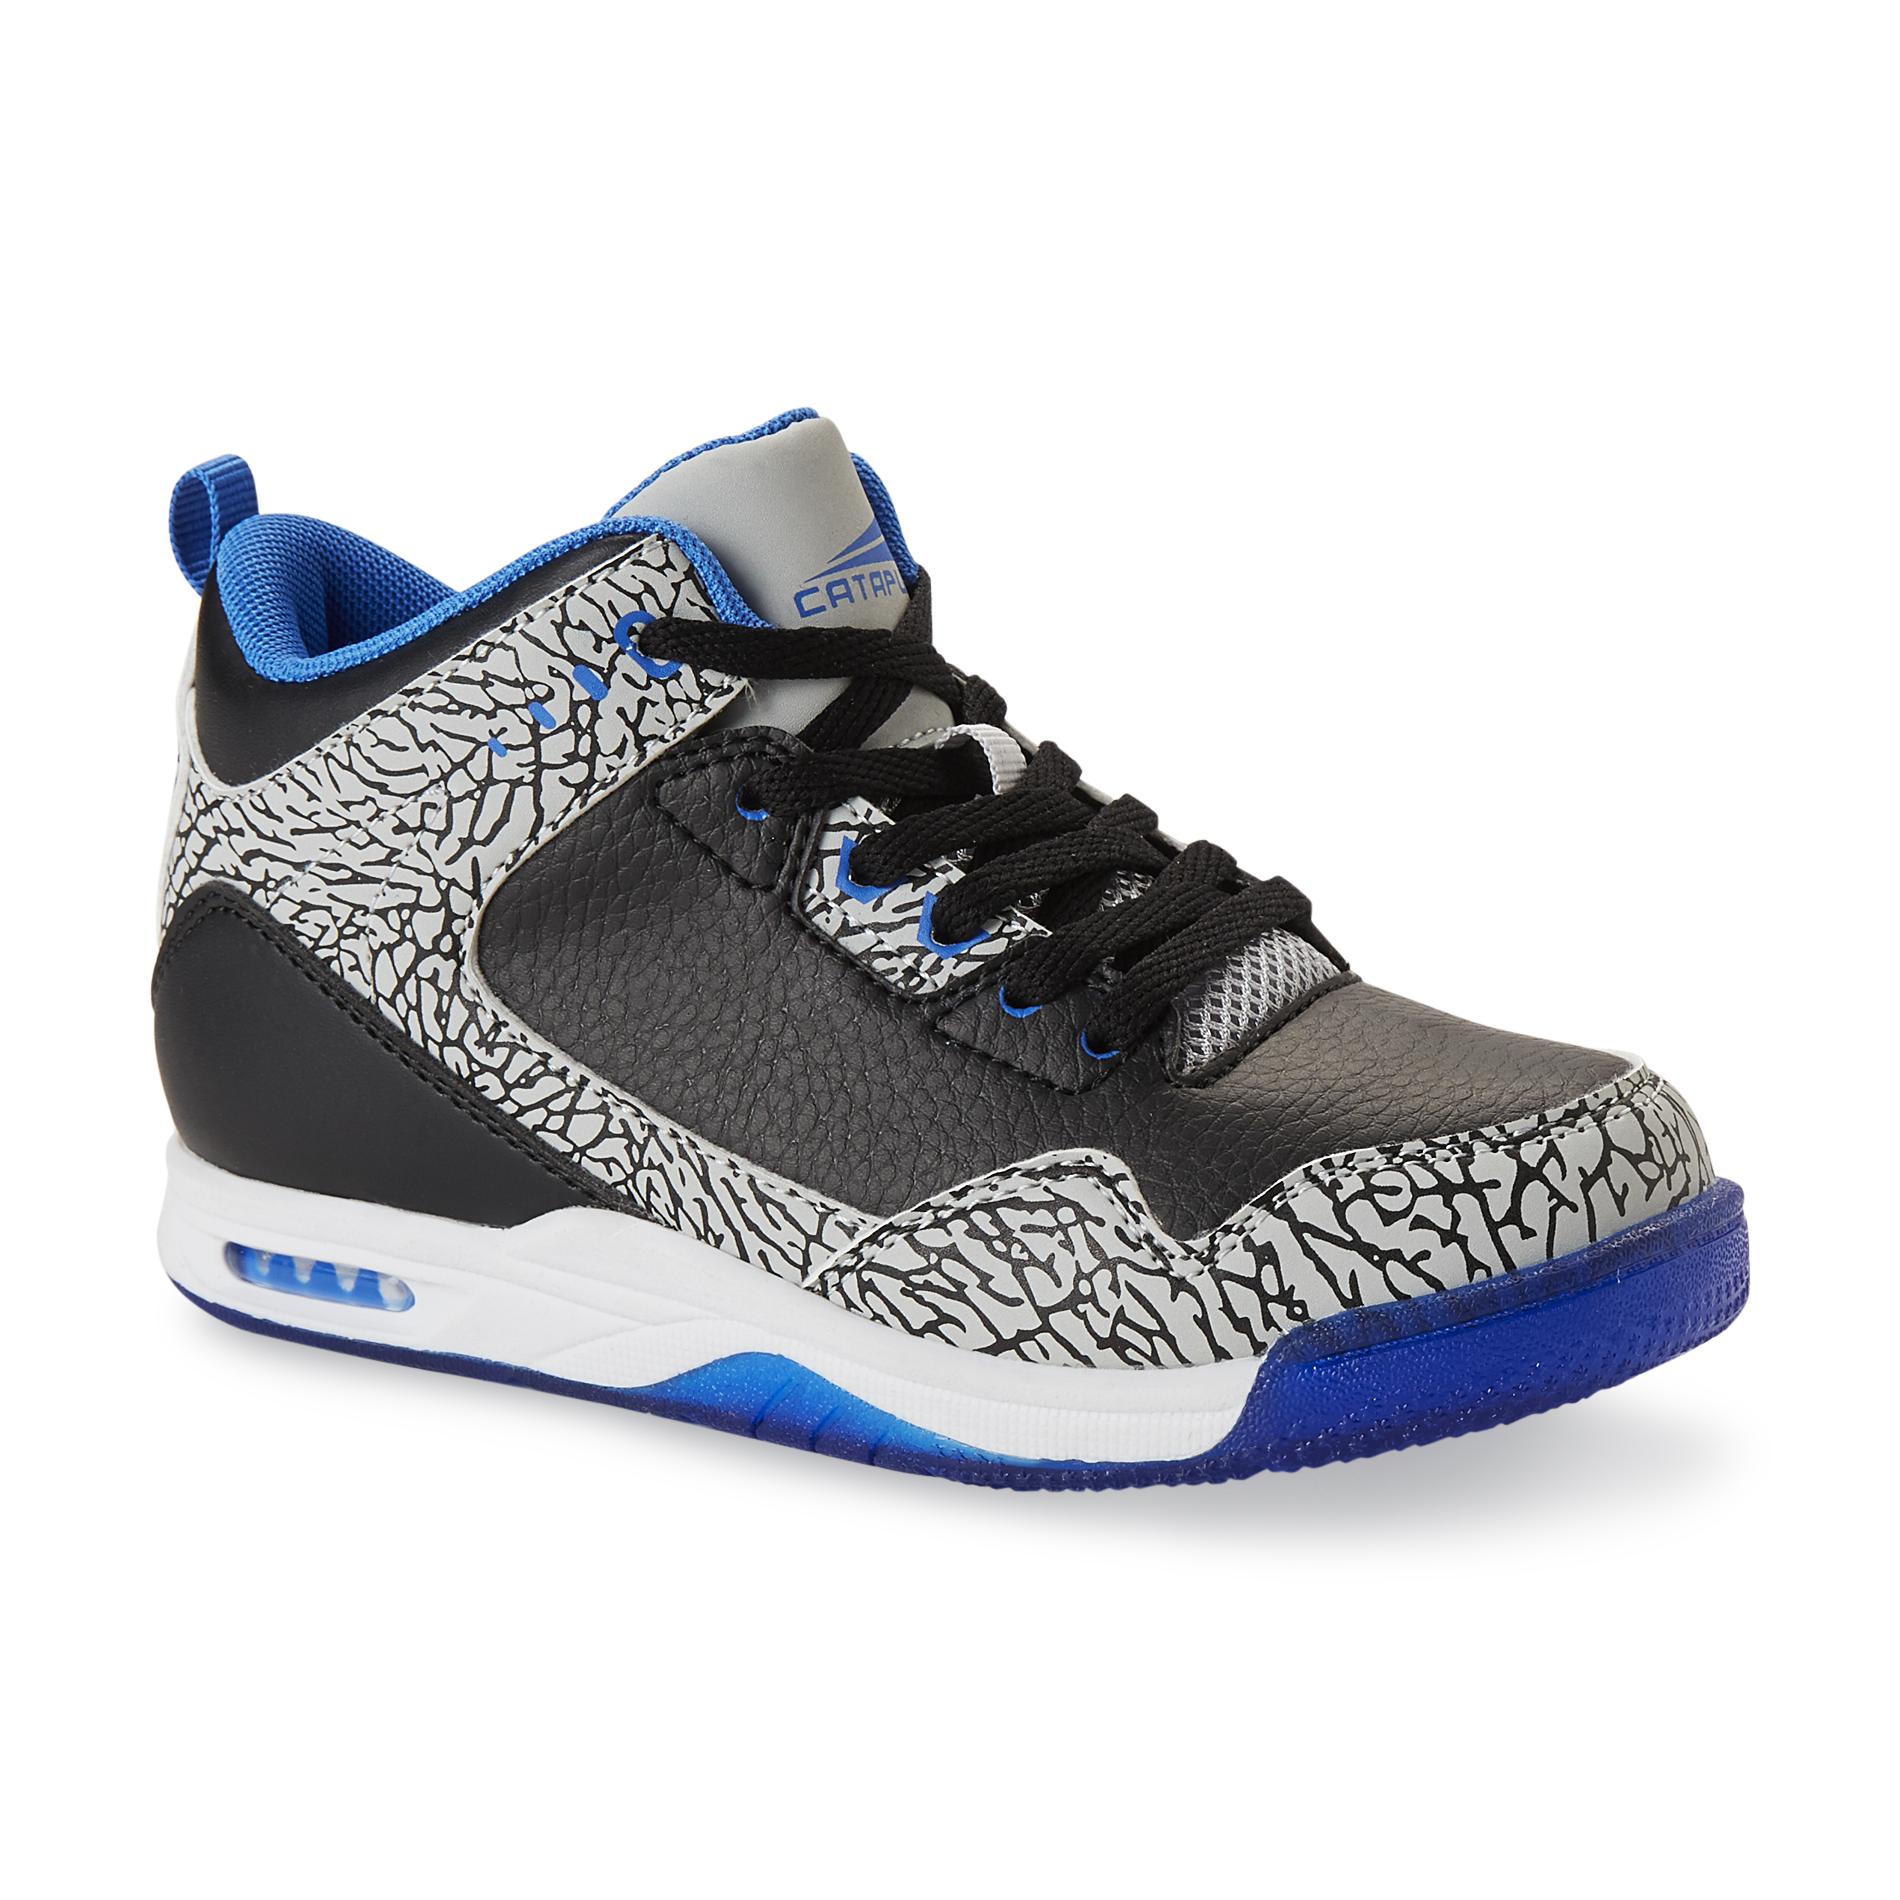 CATAPULT Boy's Commander Black/Blue/Gray Basketball Shoe | Shop Your ...